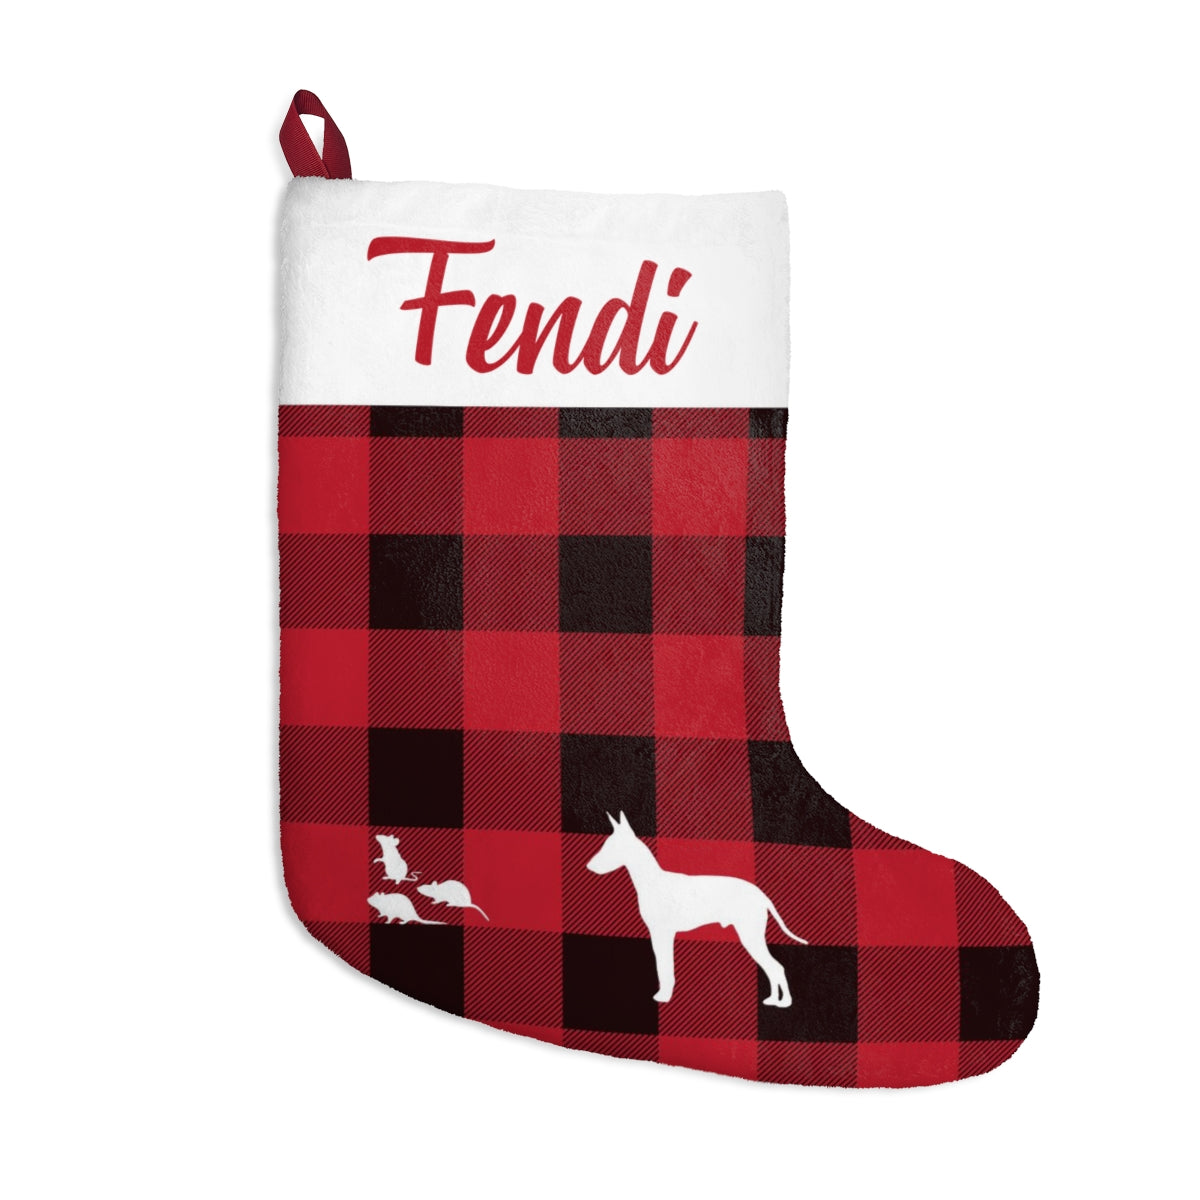 Fendi Christmas Stockings